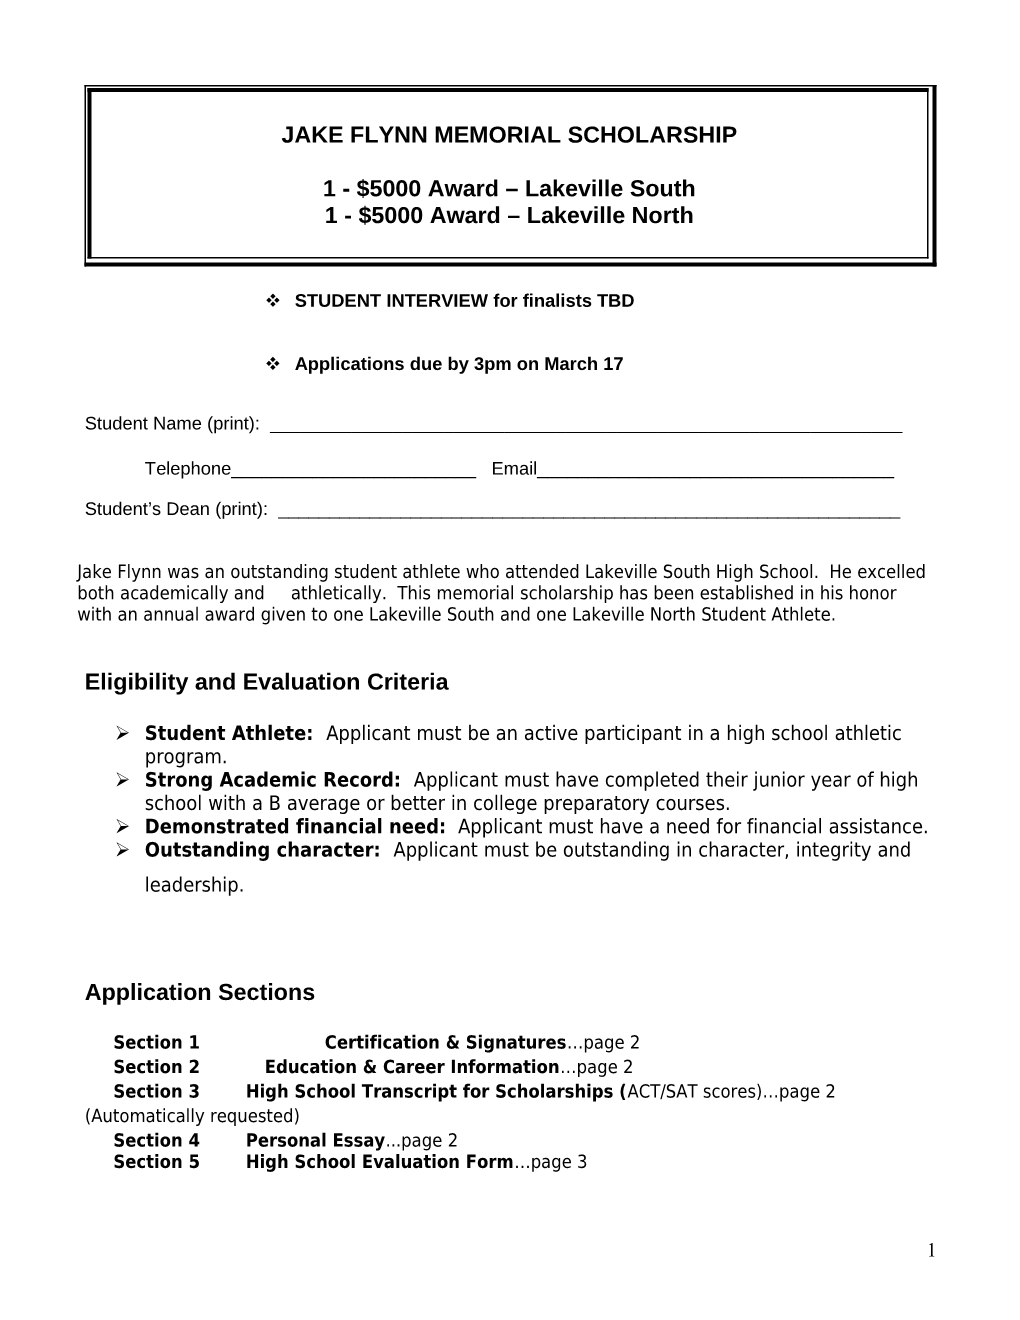 Lnhs Local Scholarship Application